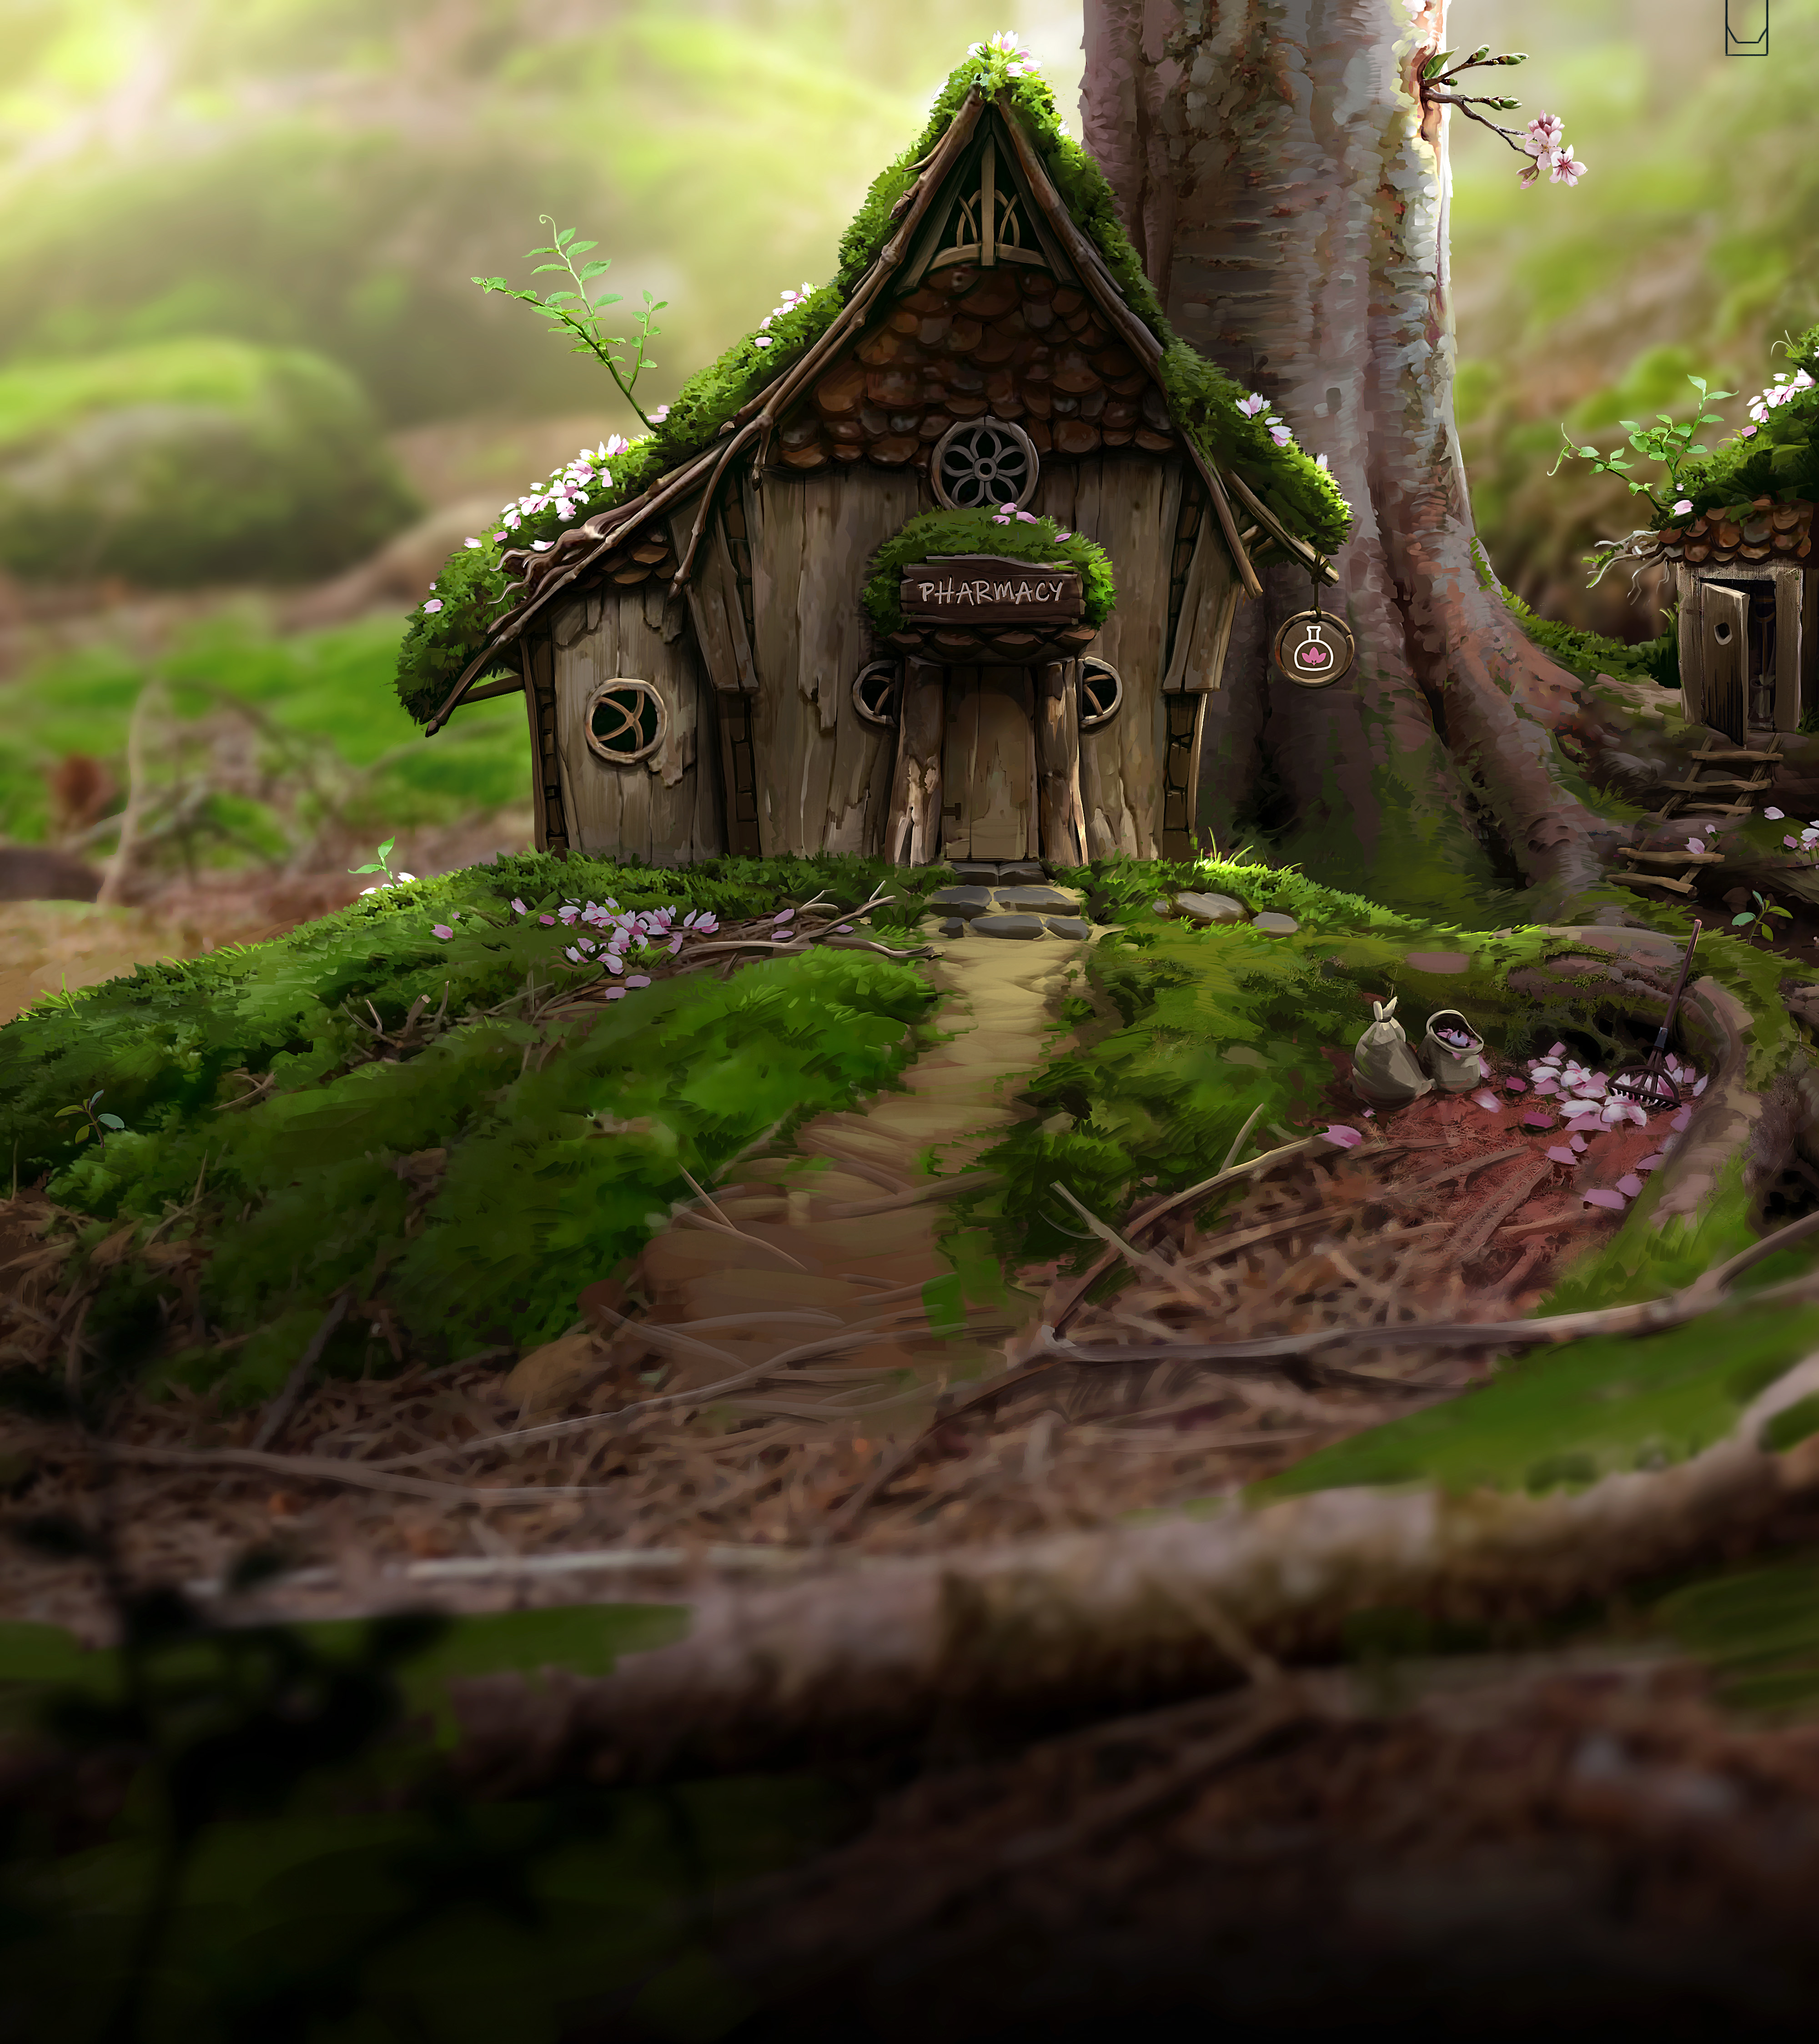 Artwork Digital Art Hobbiton Tree Stump Stores Plants 4000x4495